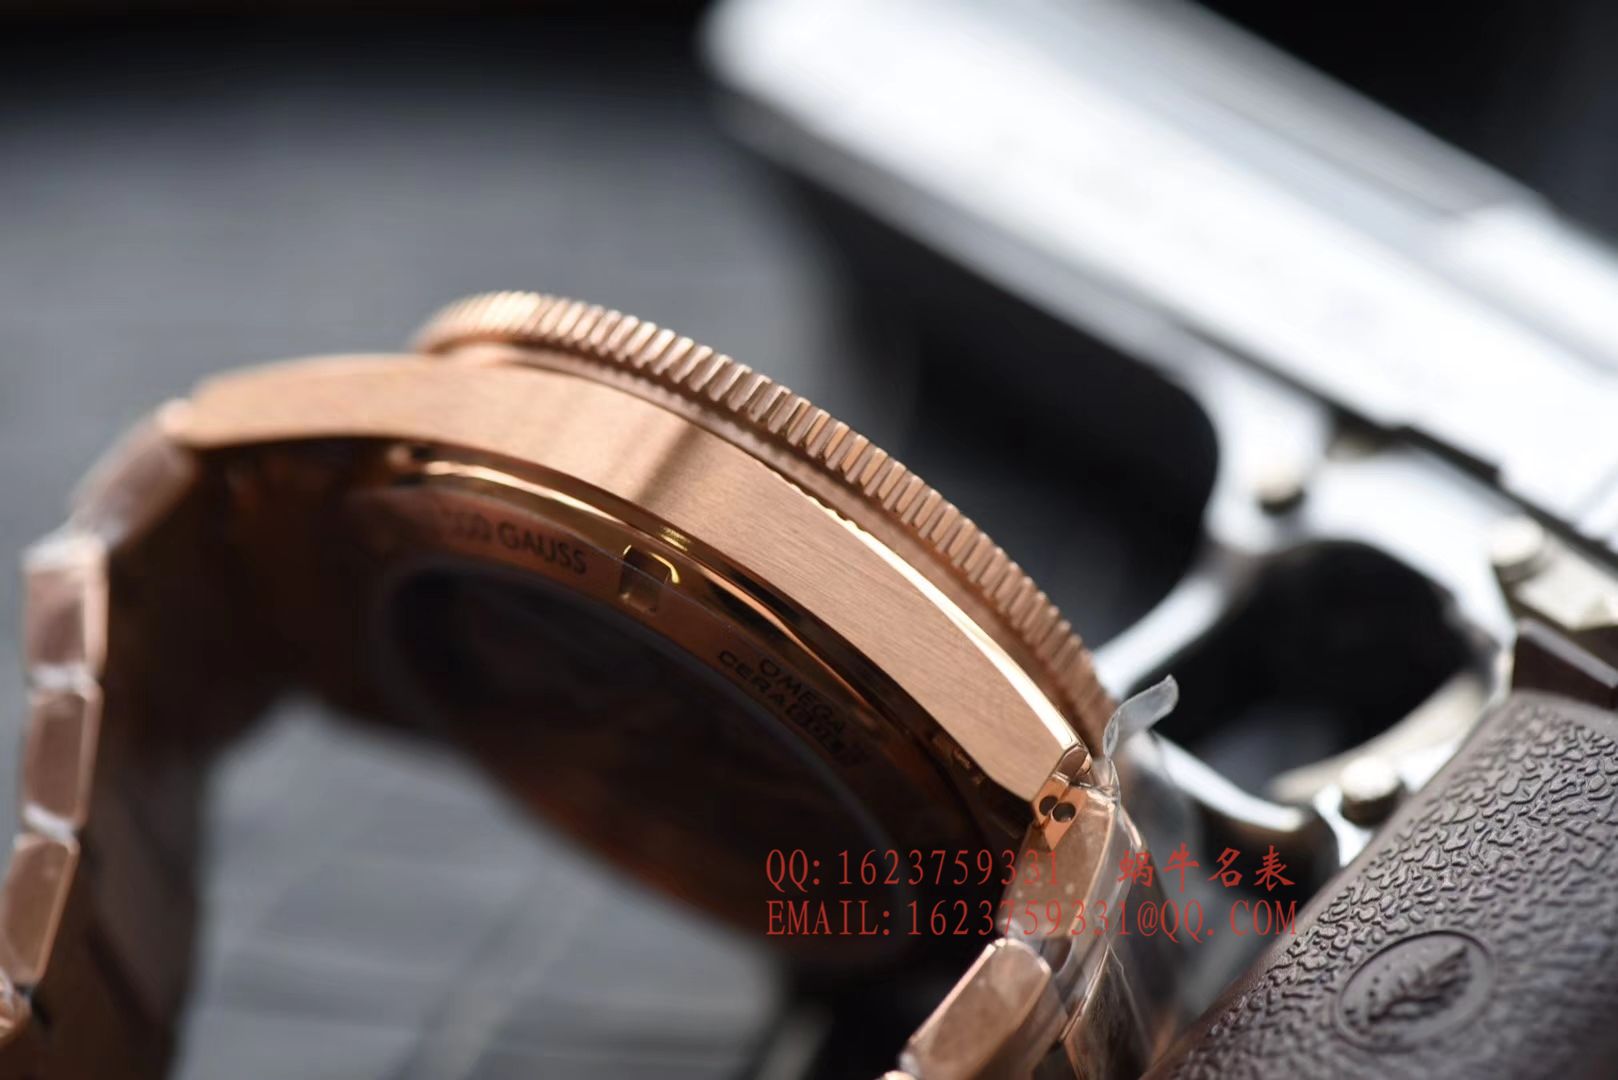 【XF一比一超A高仿手表】欧米茄 海马300系列233.60.41.21.01.001腕表 / MAH185